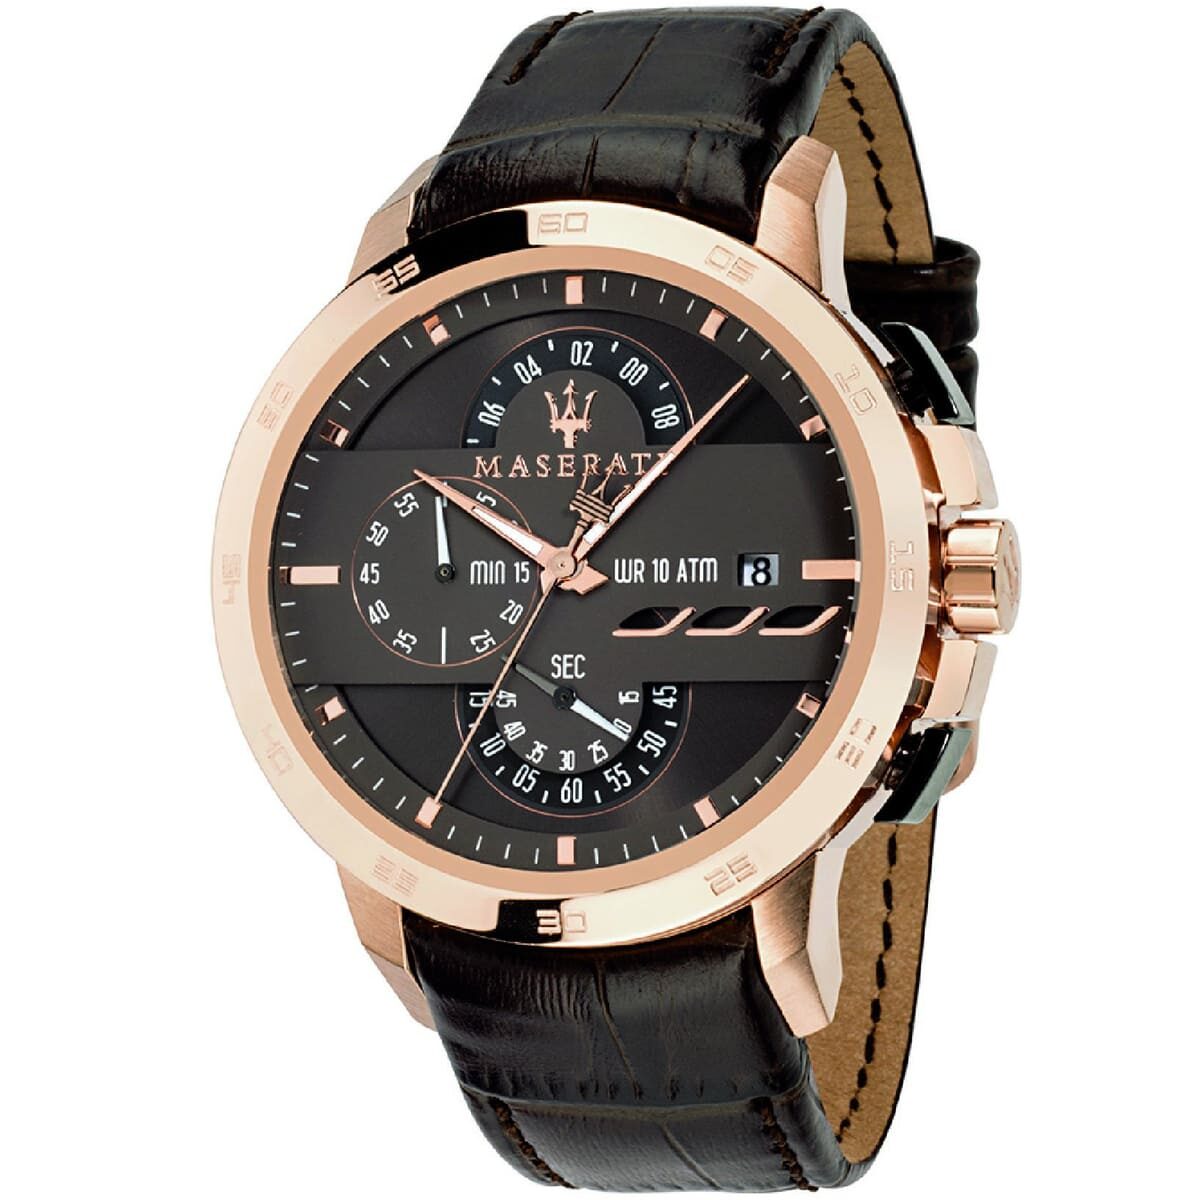 r8871619001-maserati-watch-men-brown-dial-leather-strap-quartz-battery-analog-chronograph-wr-10-atm-ingegno